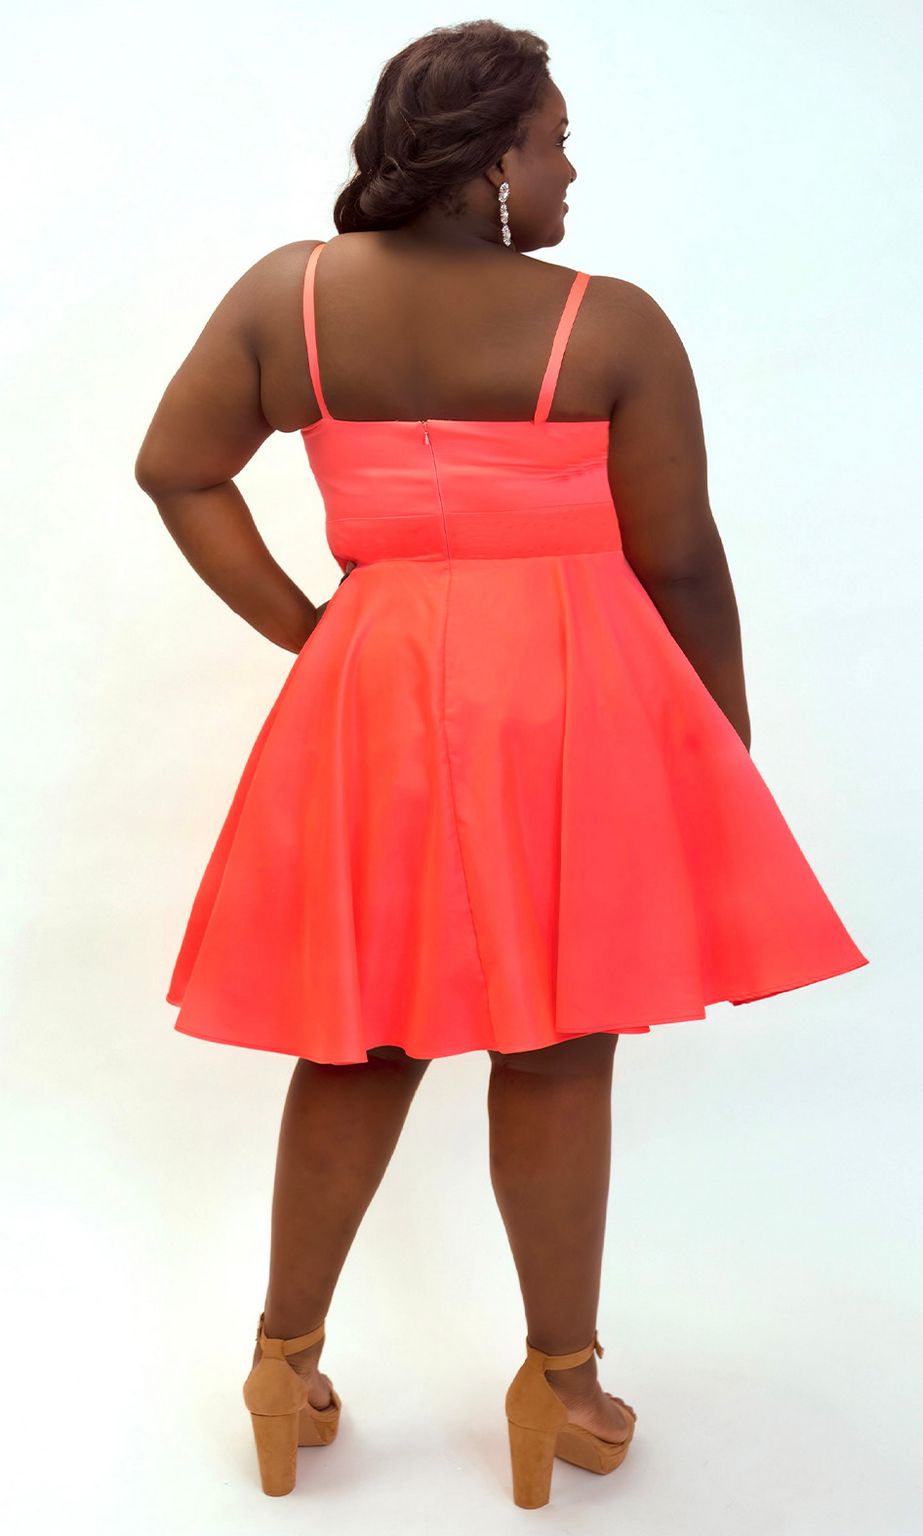 Plus Size Dresses Short Plus Size Satin Homecoming Dress Hot Coral